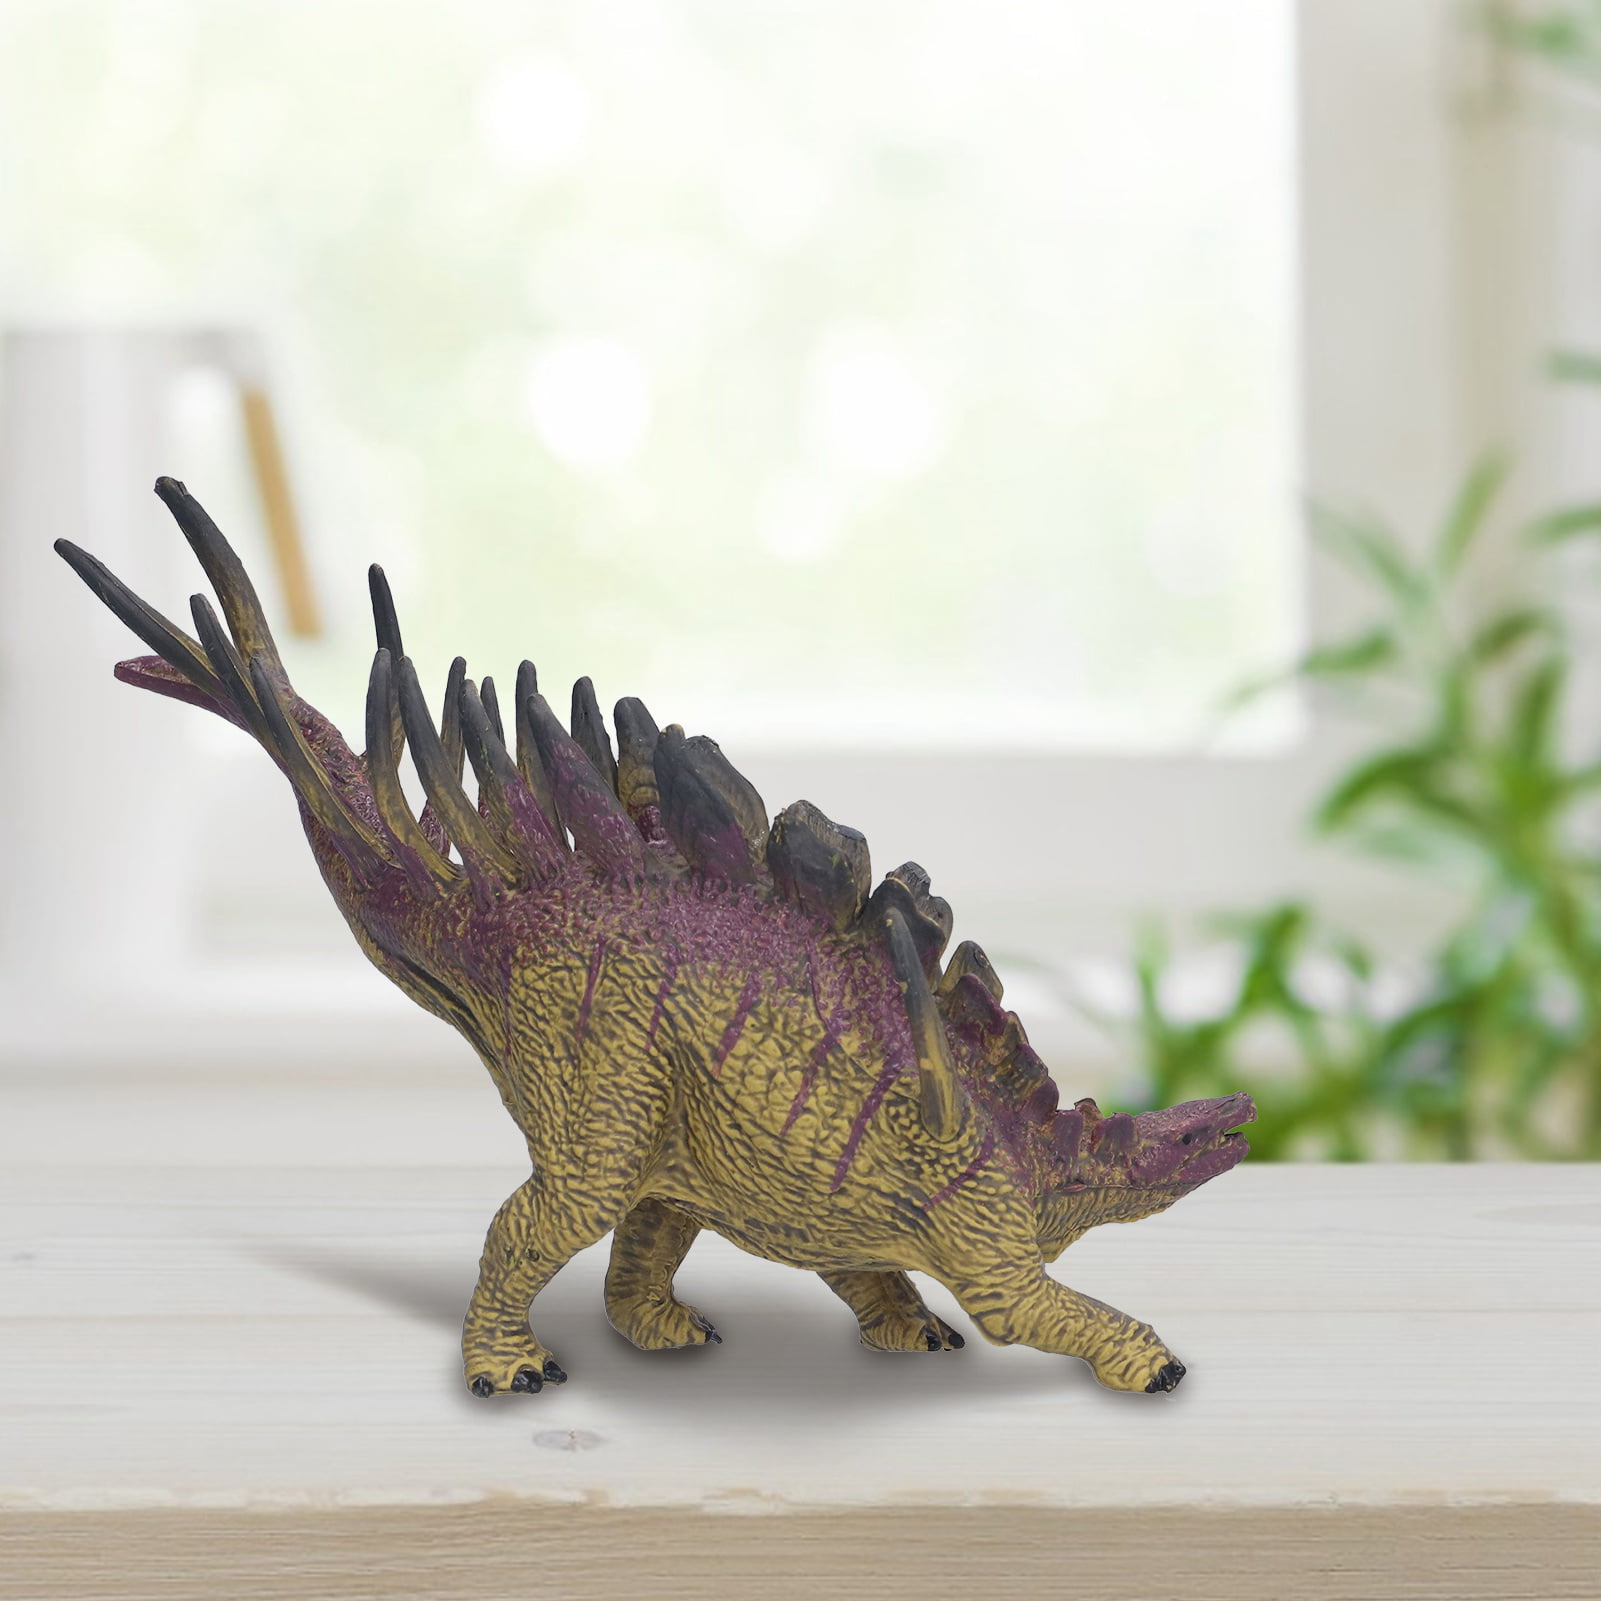 Jurassic Realistic Kentrosaurus Dinosaur Model 7" Long Figure For Kids Toy Gift 